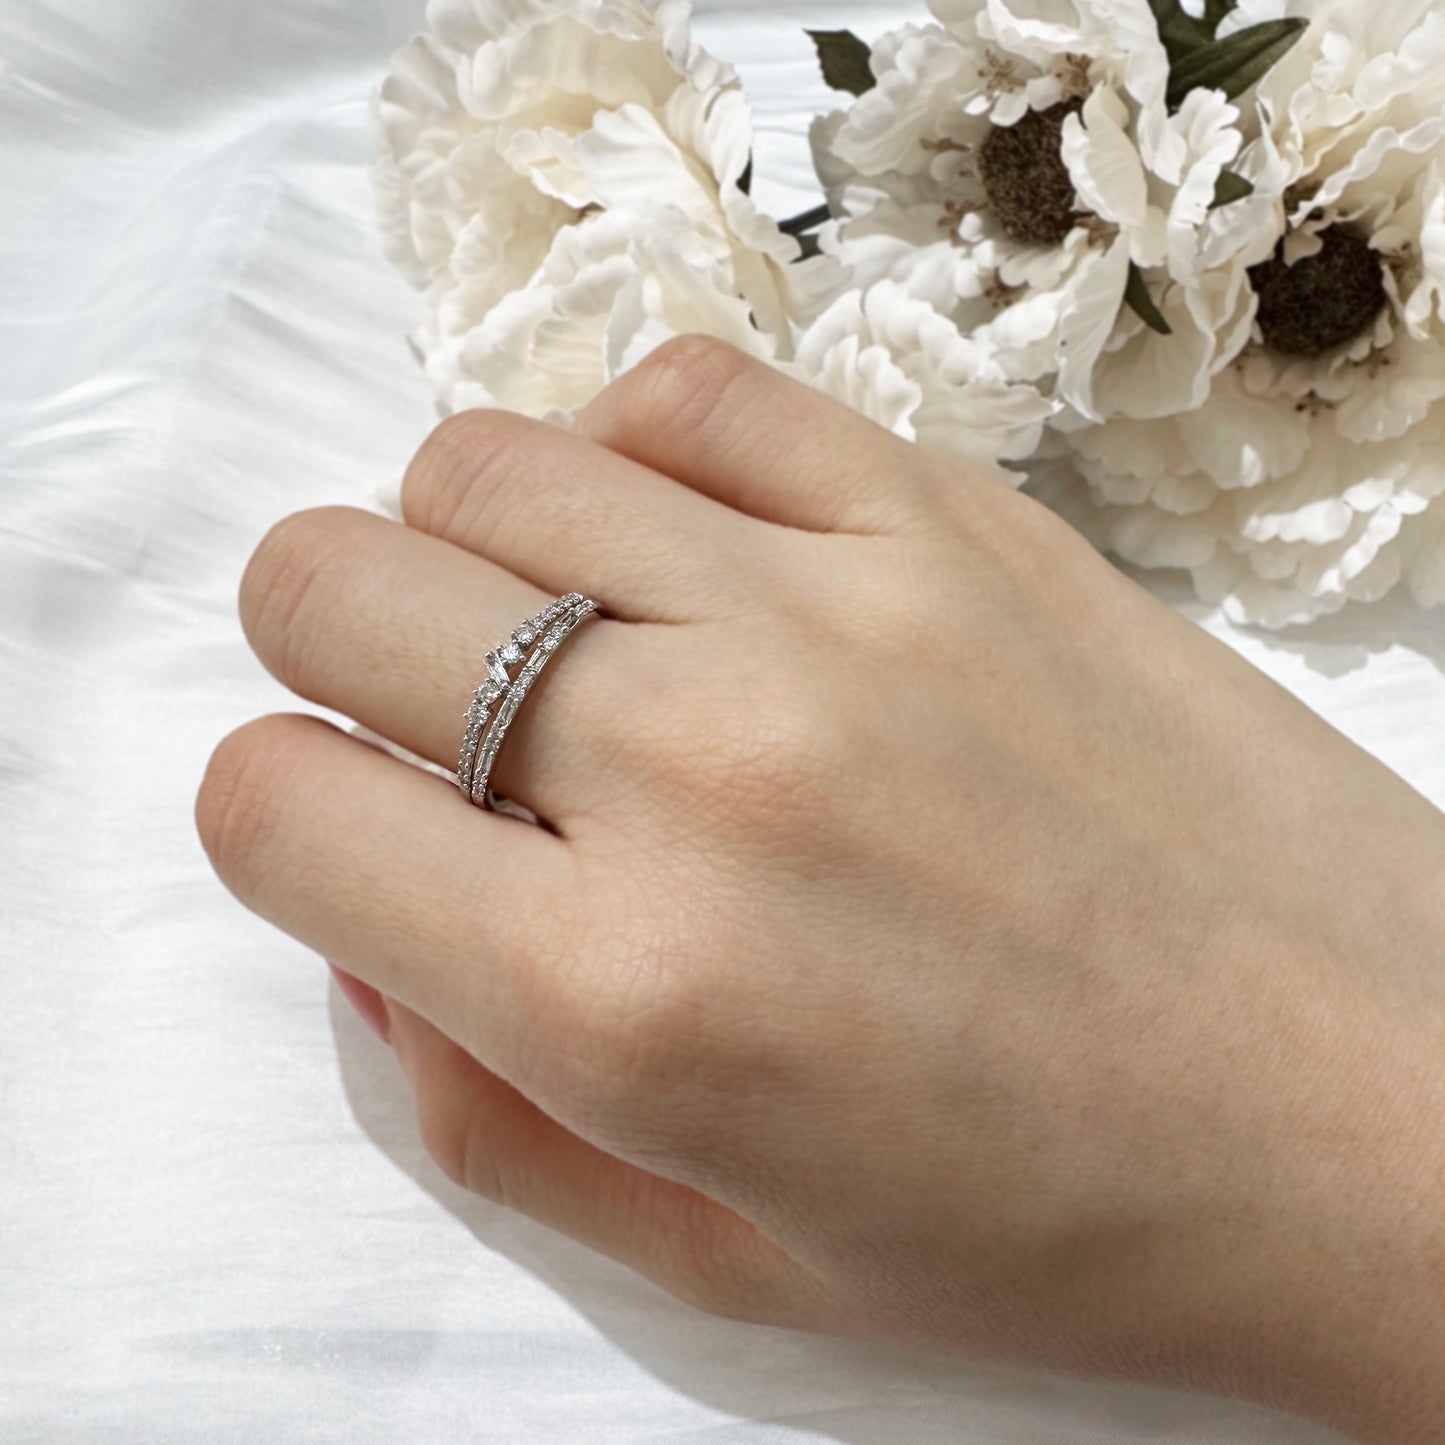   18k白金雙排鑽石戒指在中指上 18k White Gold Double Row Cluster Ring on middle finger